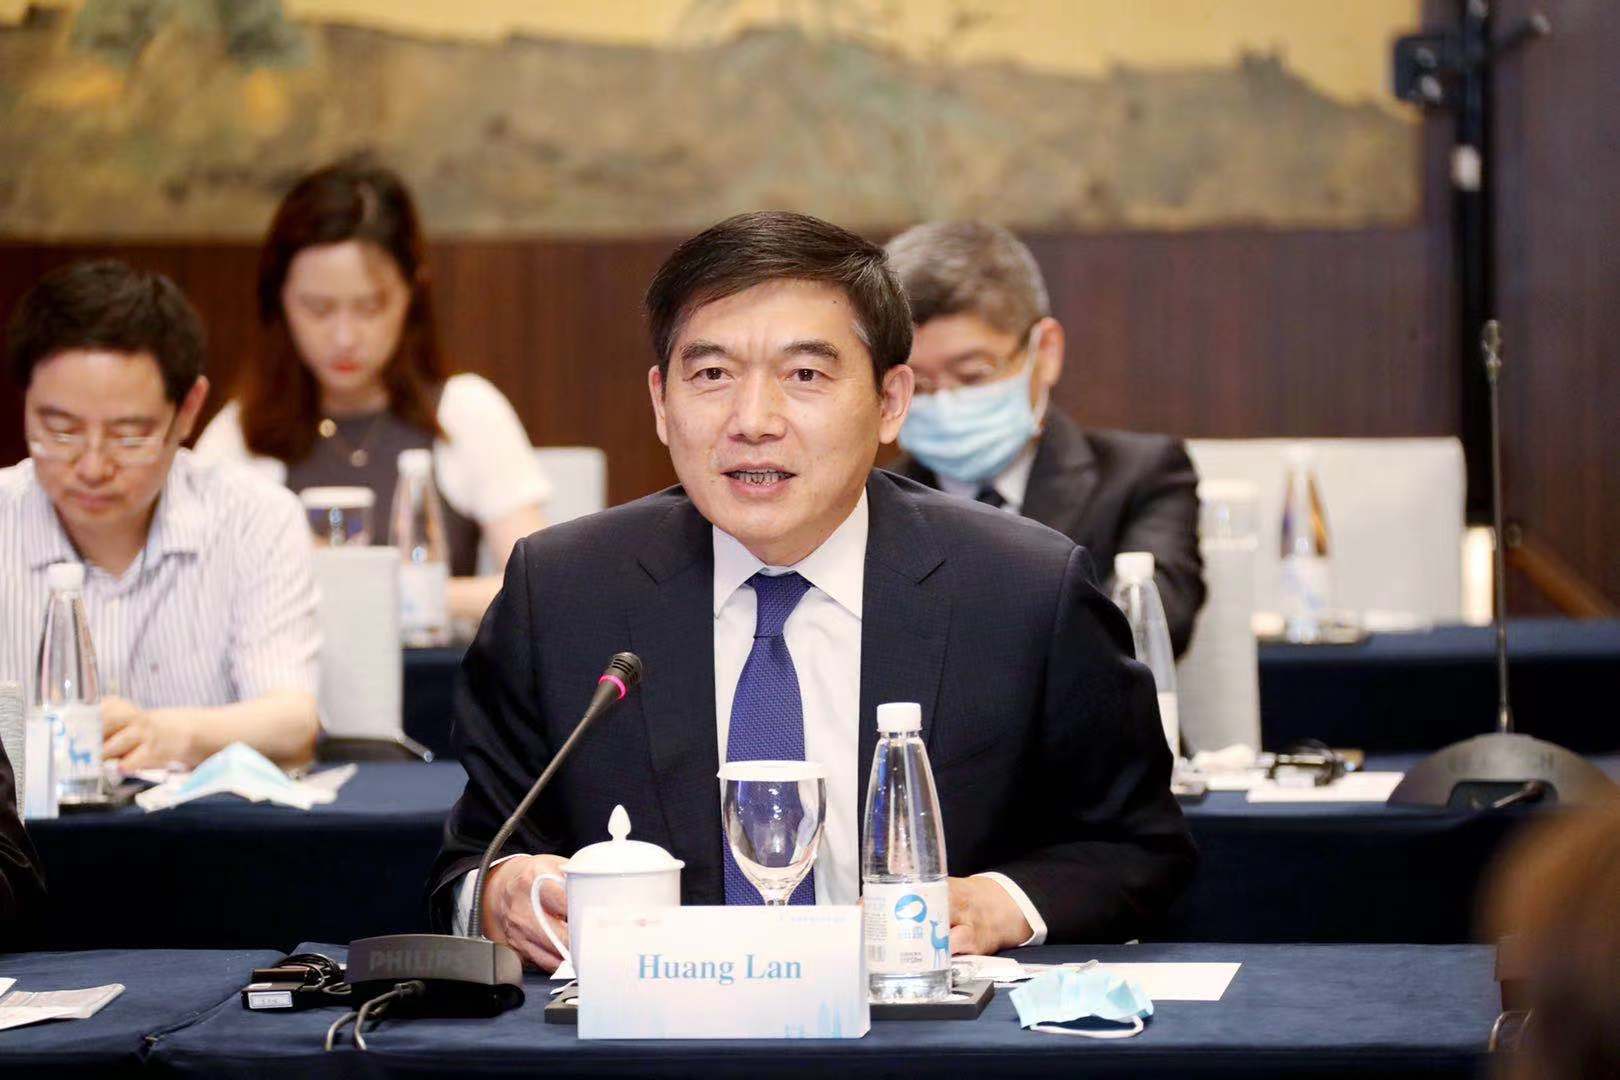 Mr HUANG Lan, Deputy Secretary General of Jiangsu Provincial People’s Government, delivered opening remarks 